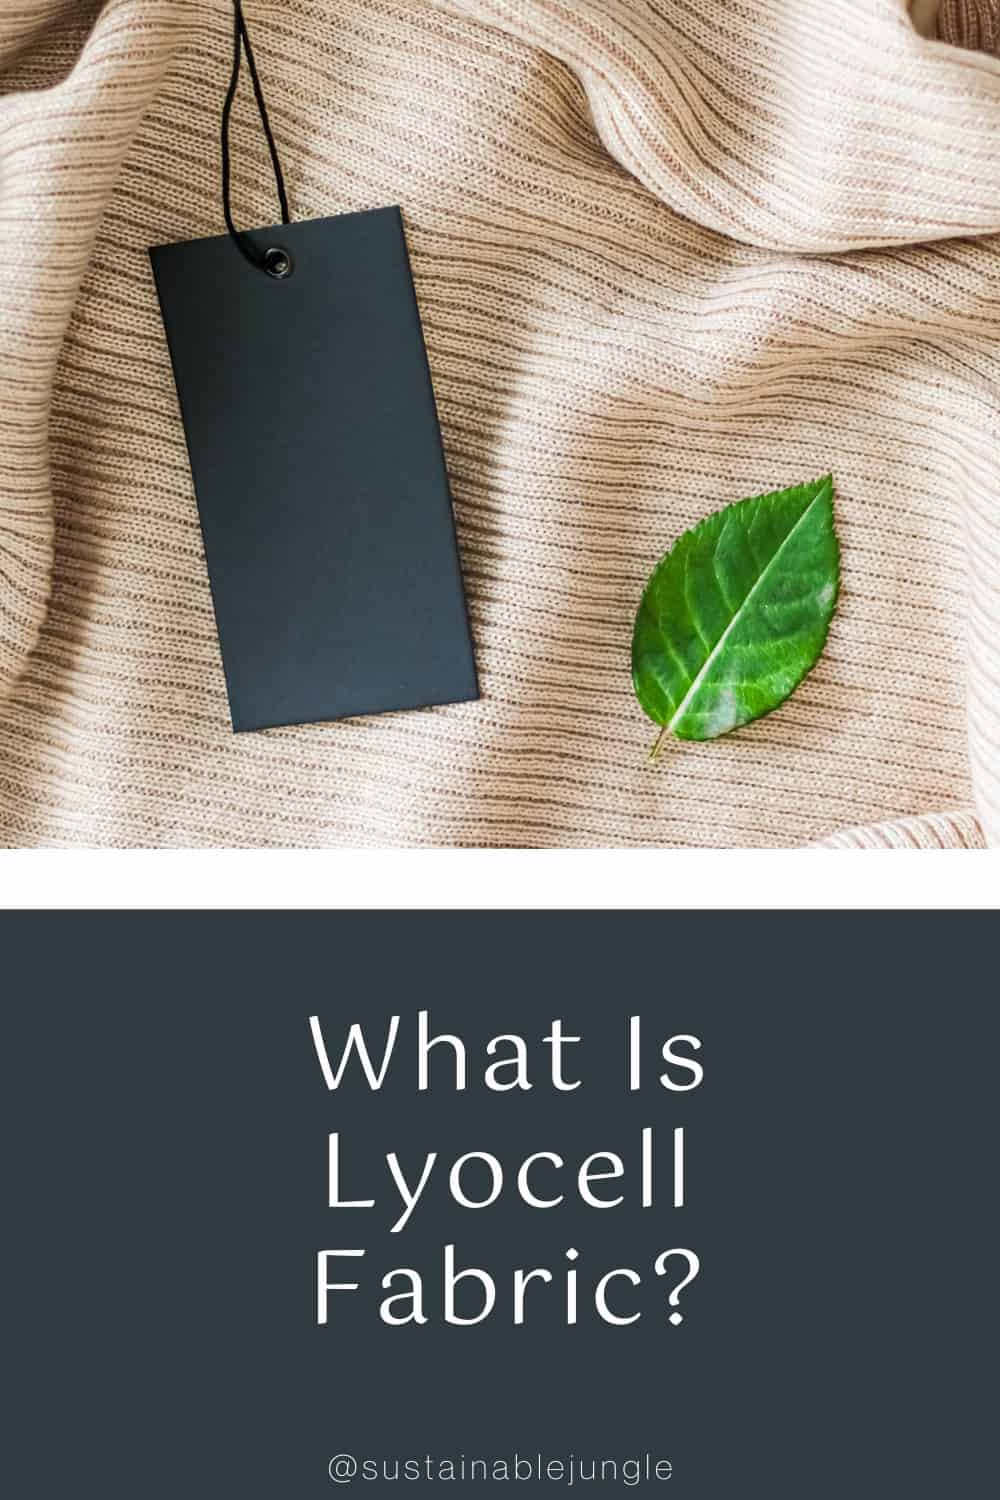 什么是Lyocell面料，其可持续性是否达到标准?#lyocellfabric #lyocelltencelfabric #islyocellfabricsustainable #tencellyocell #whatislyocellfabric #sustainablejungle图片由Annaleven通过Canva Pro提供